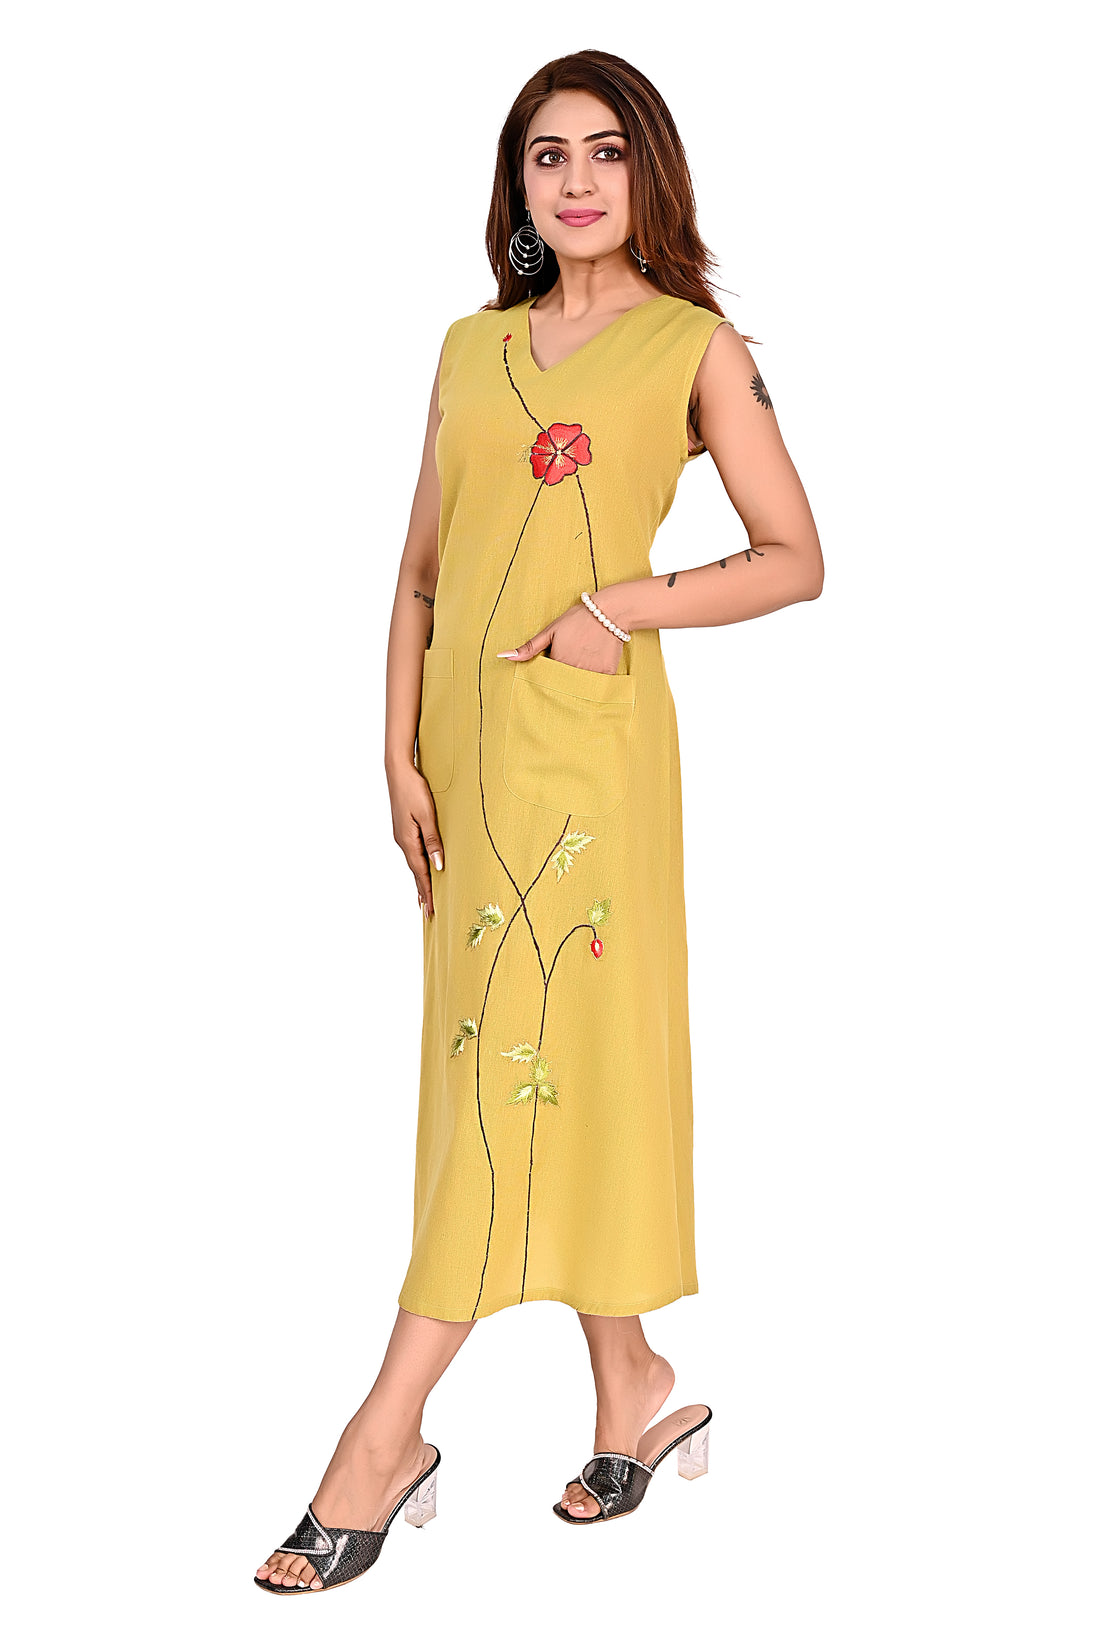 Nirmal online Premium cotton tunic Dress for Women in  Lemon green colour